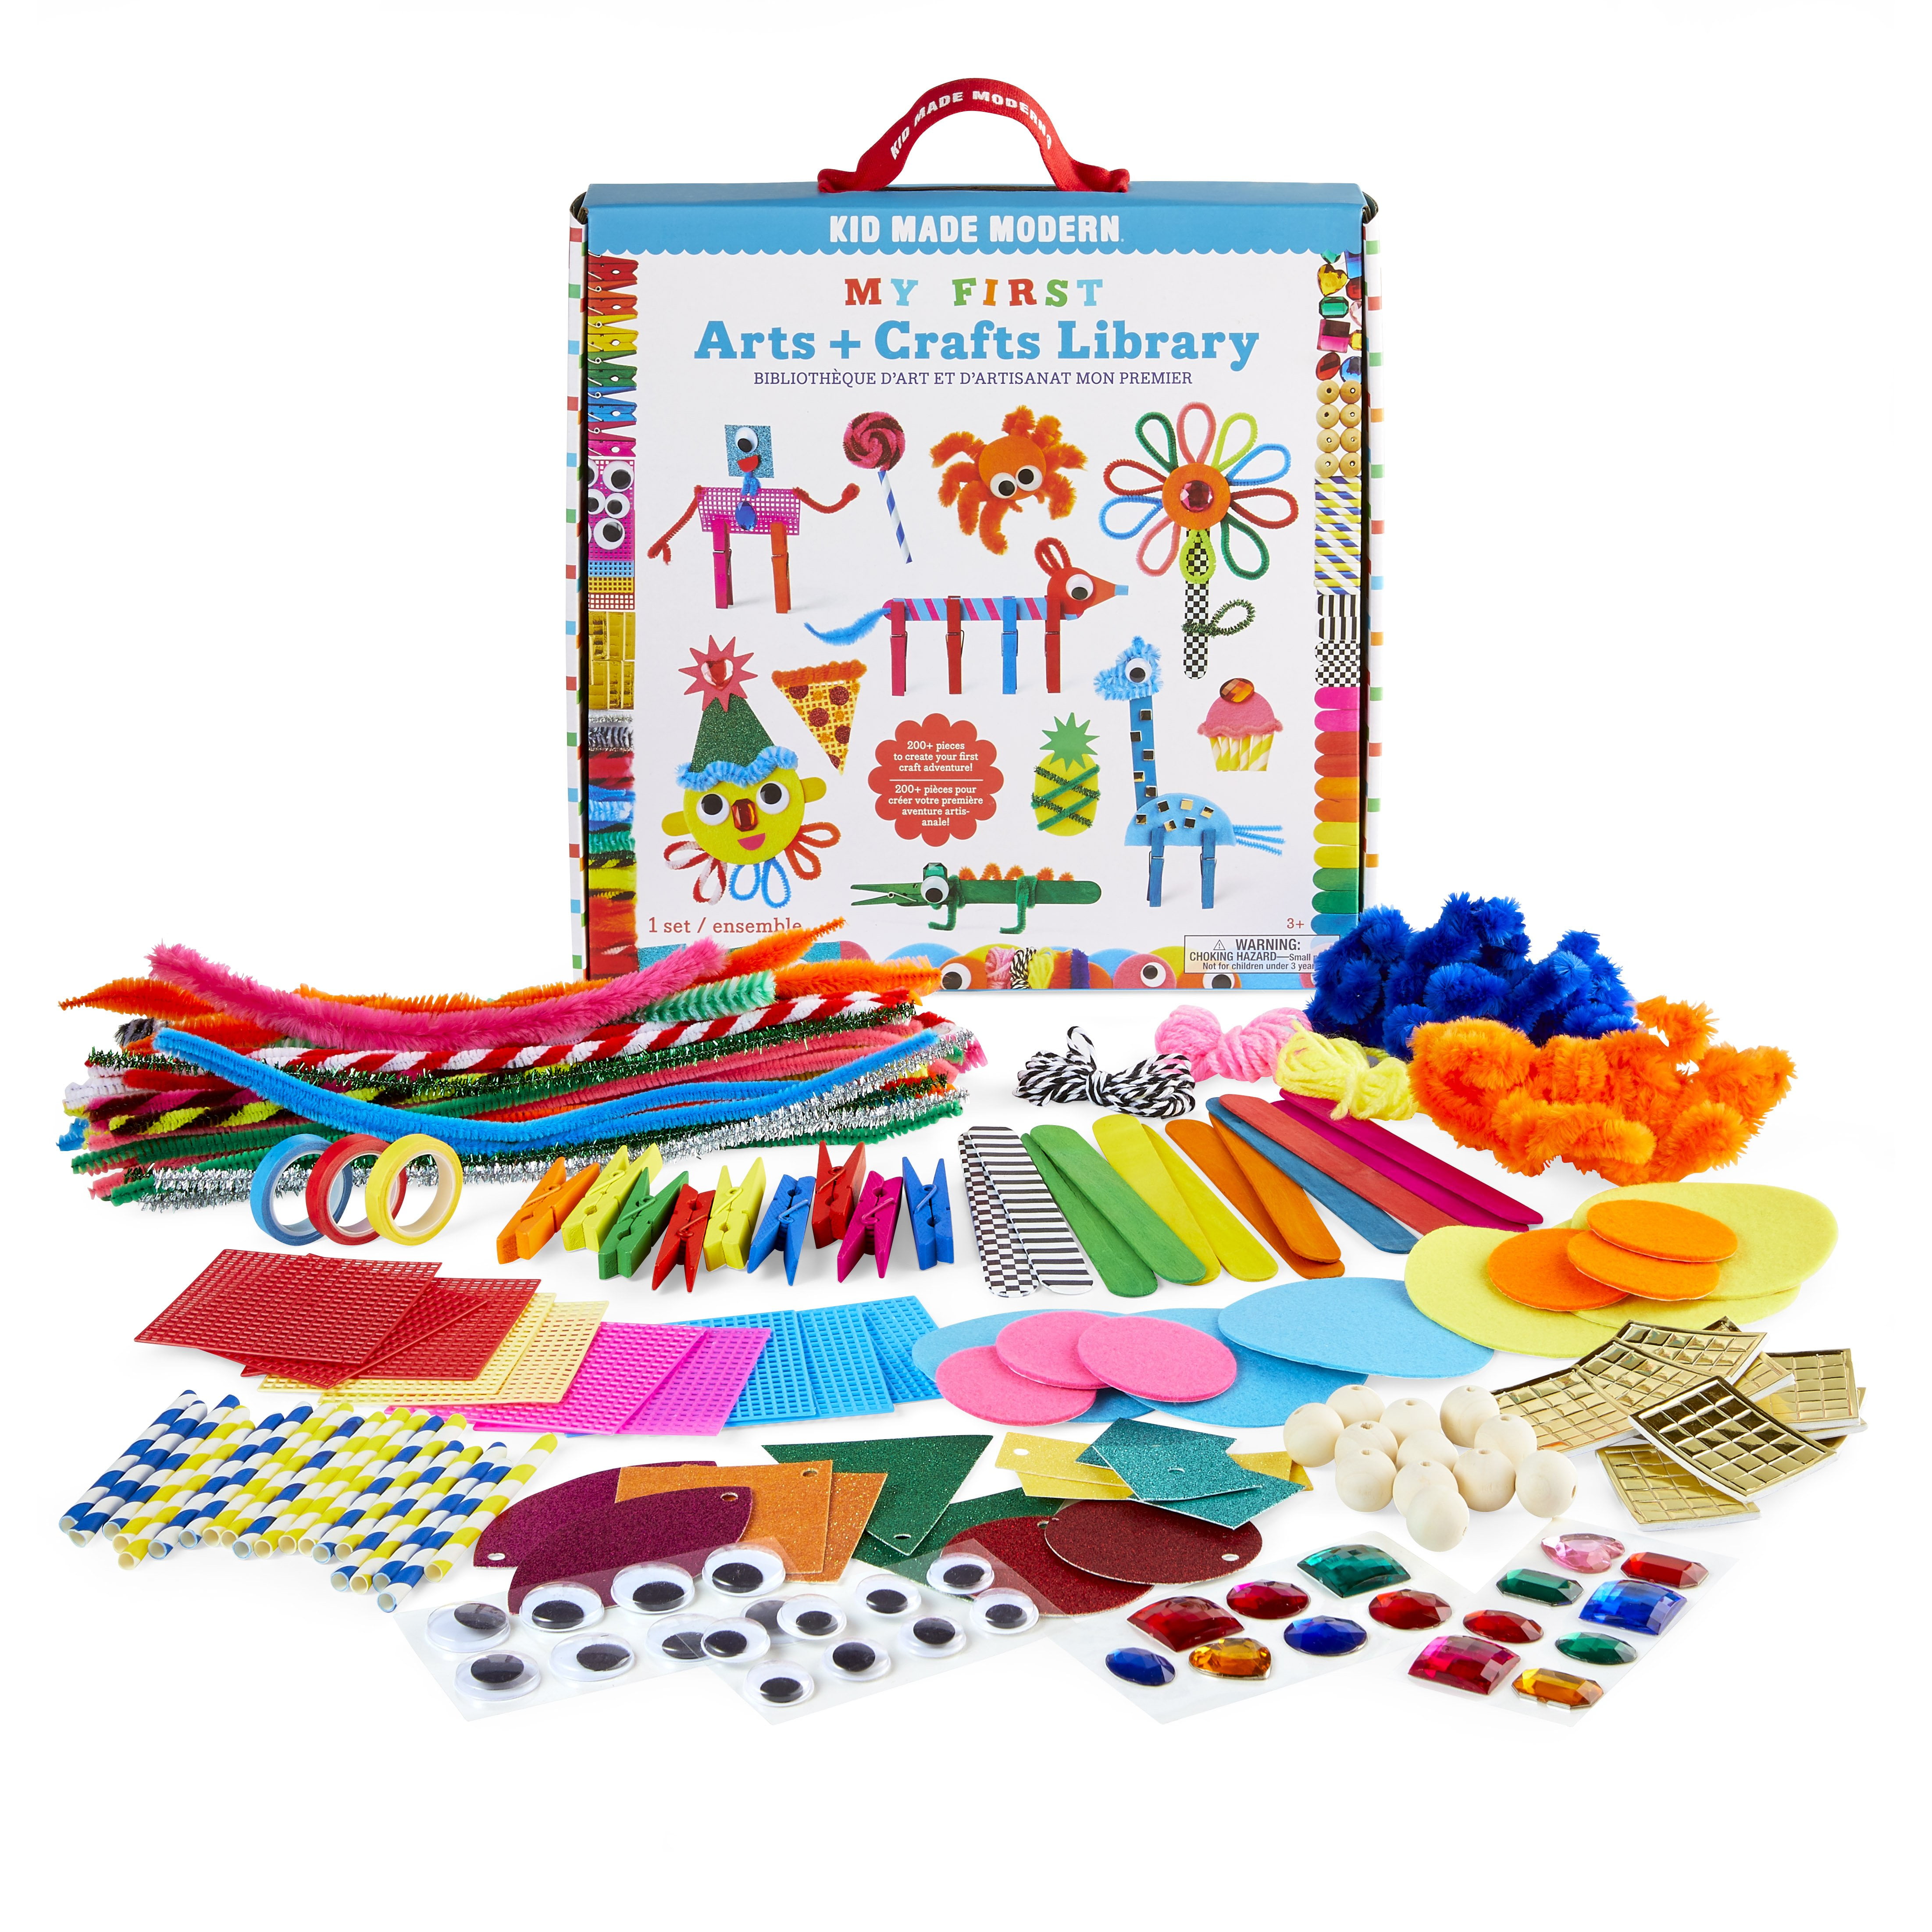 21 Cricut Tool Set Craft Basic Supplies Home School Scrapbook Crafts Accessories 